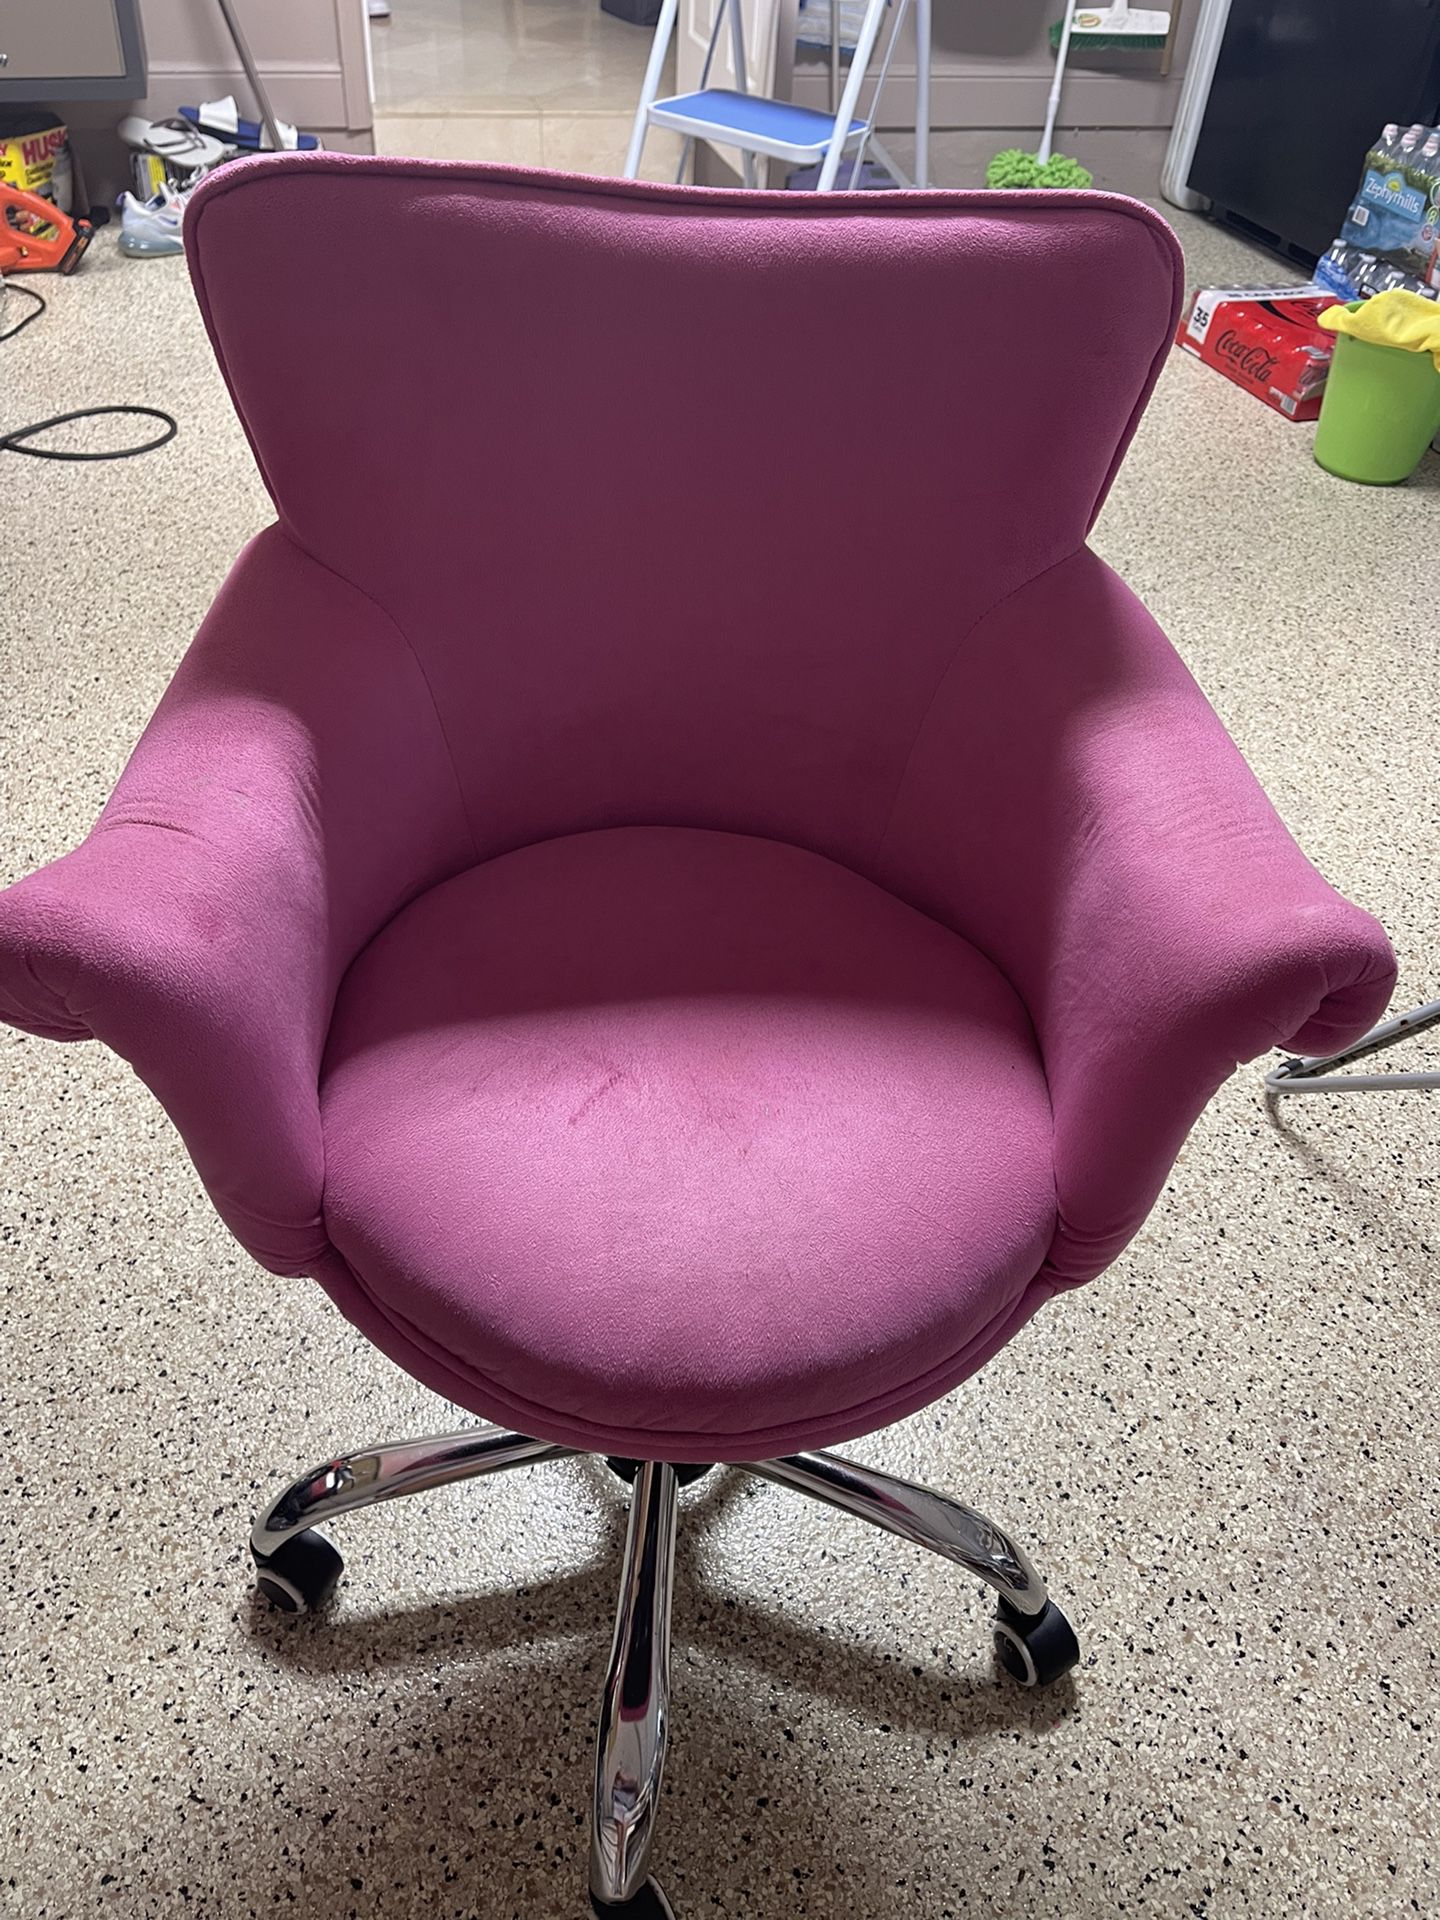 pink desk chair 